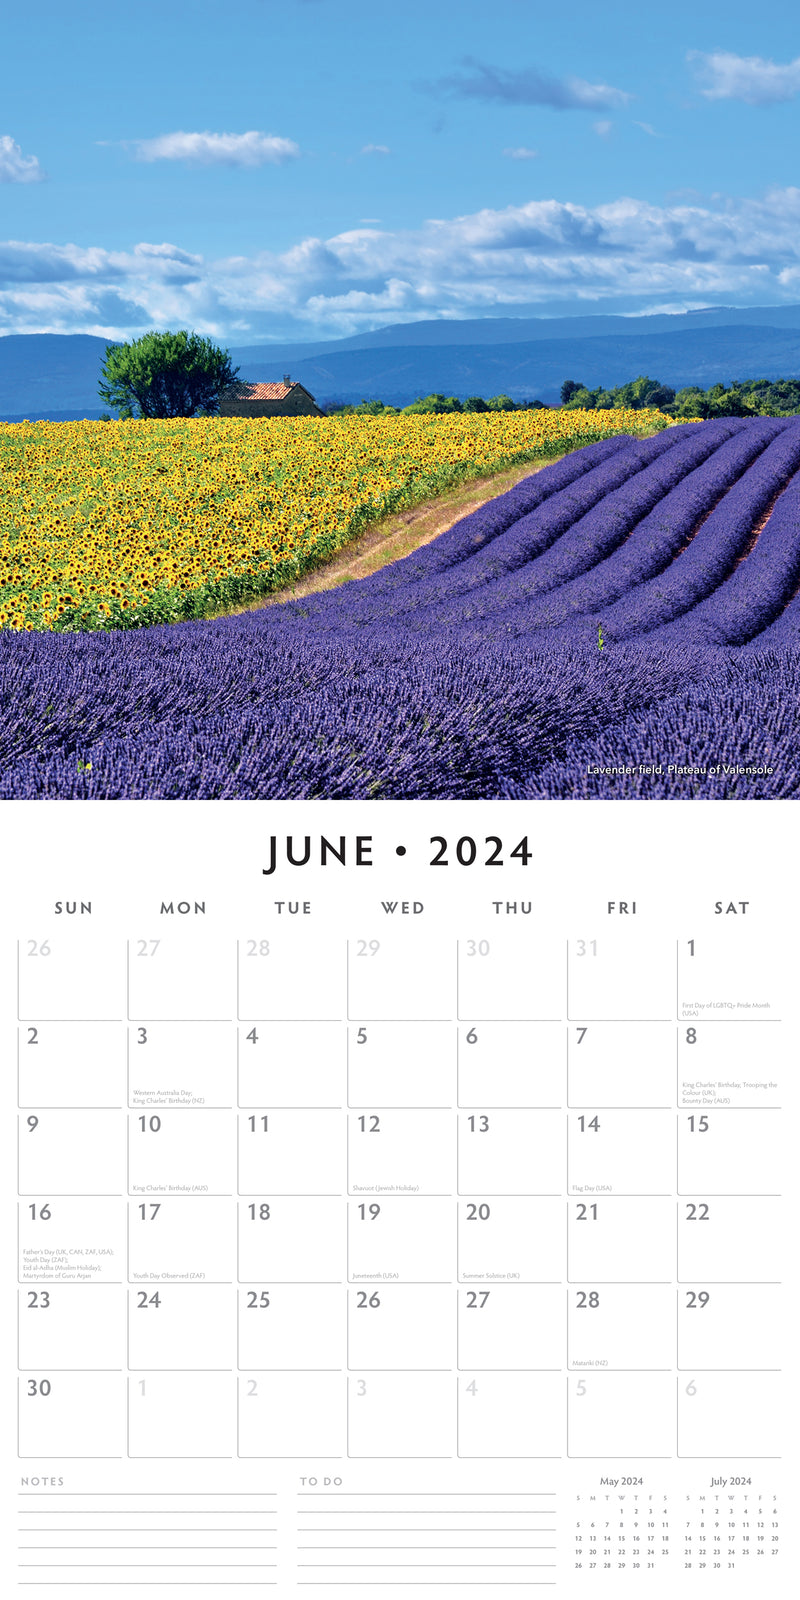 Provence 2024 Square Wall Calendar